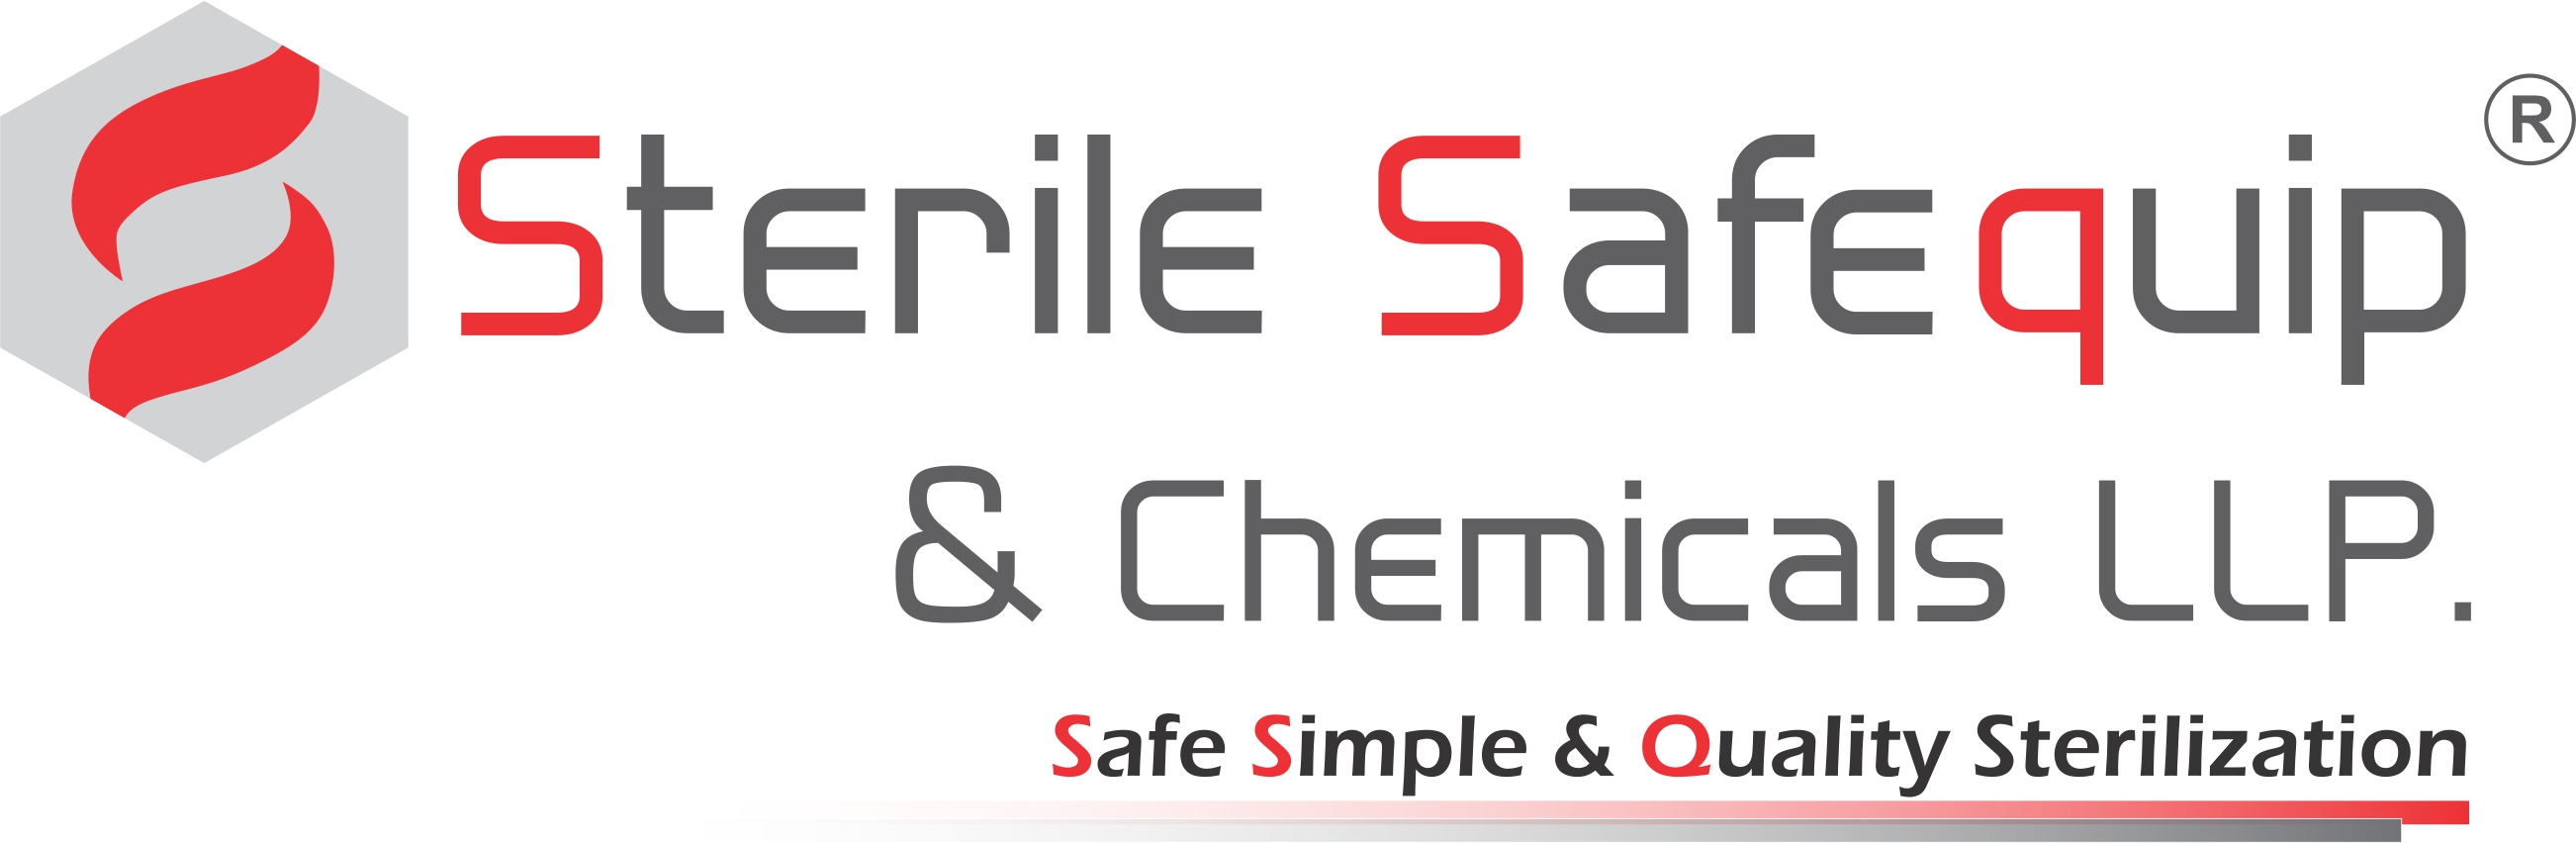 Sterile Safequip and Chemicals LLP | PurEtO | Trueklav | Eiligplaz